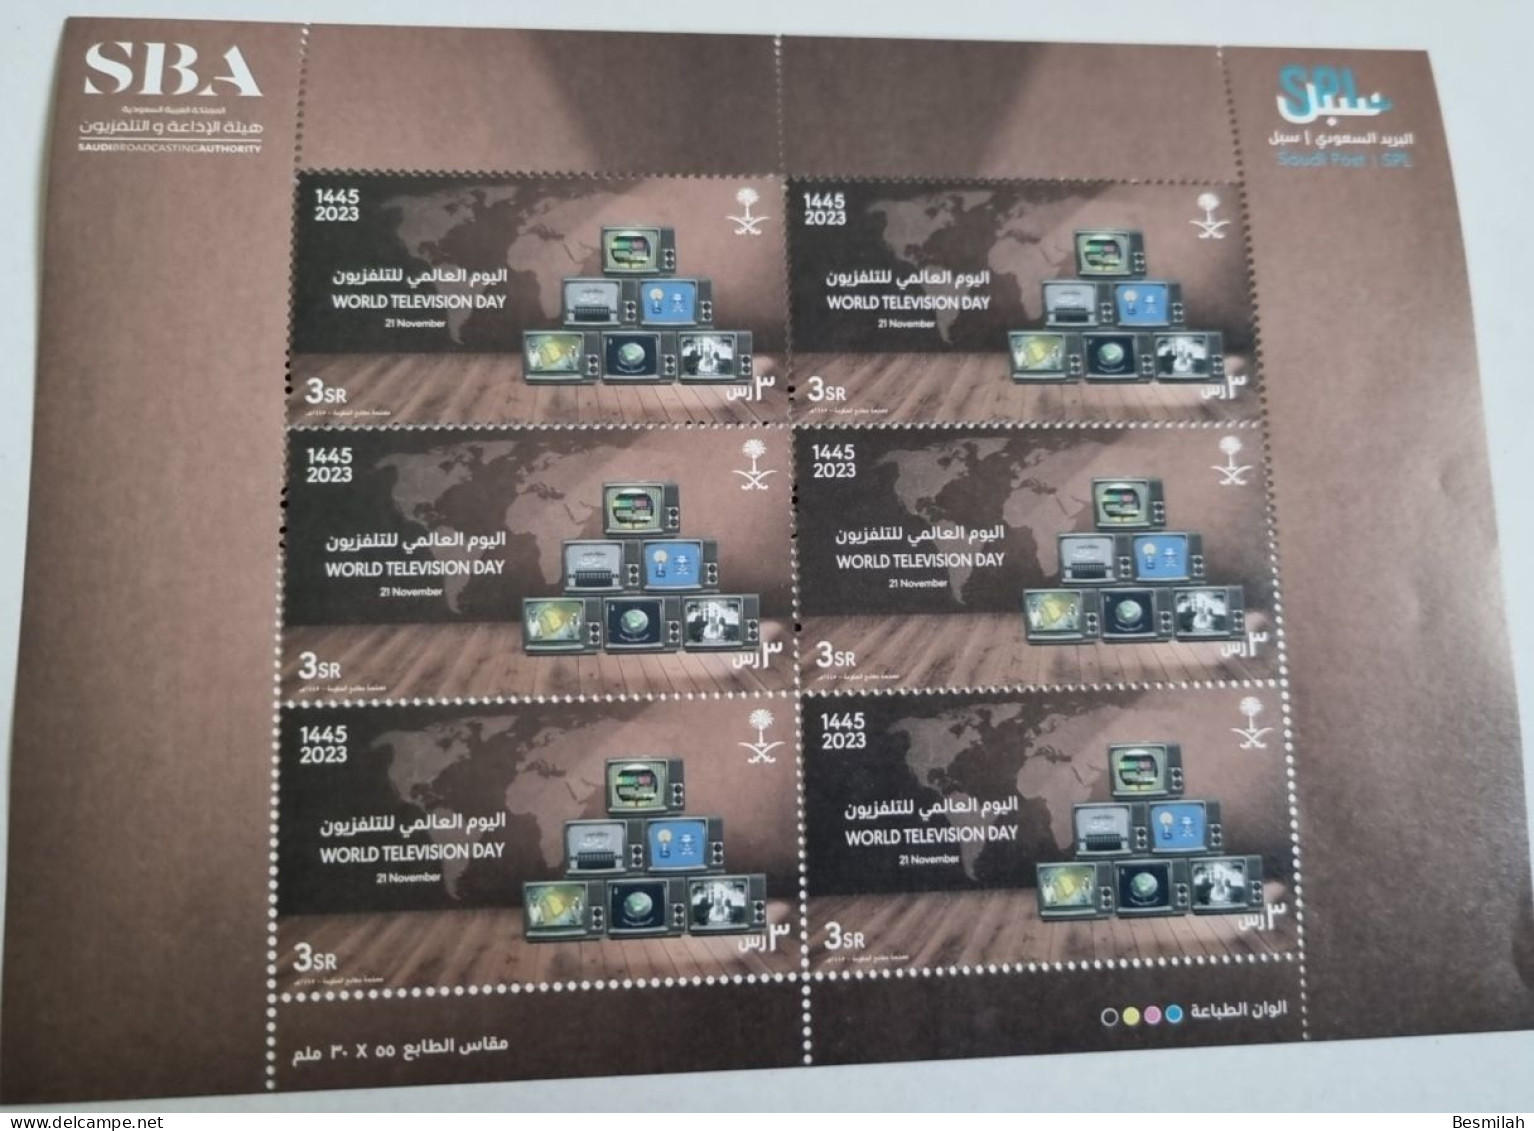 Saudi Arabia Stamp World Television Day 2023 (1445 Hijry) 7 Pieces Of 3 Riyals + First Day Version Cover - Arabia Saudita